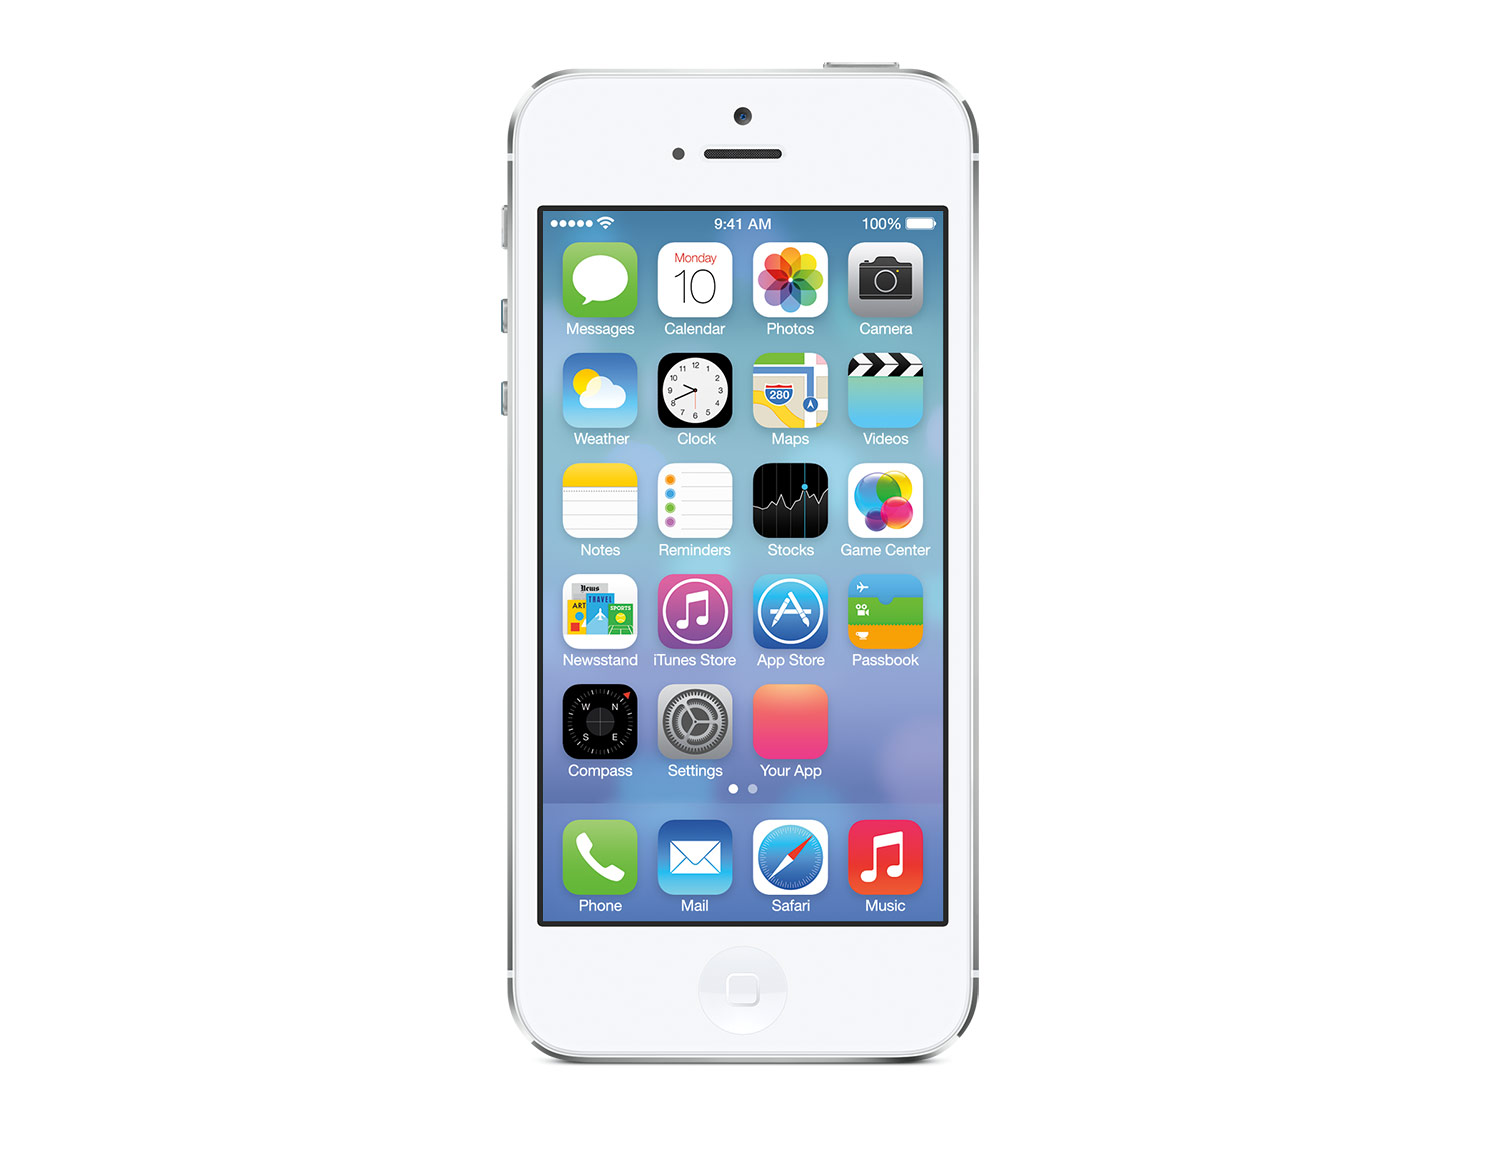 iPhone-iOS-7-Home-Screen-Free-PSD-Mockup-2